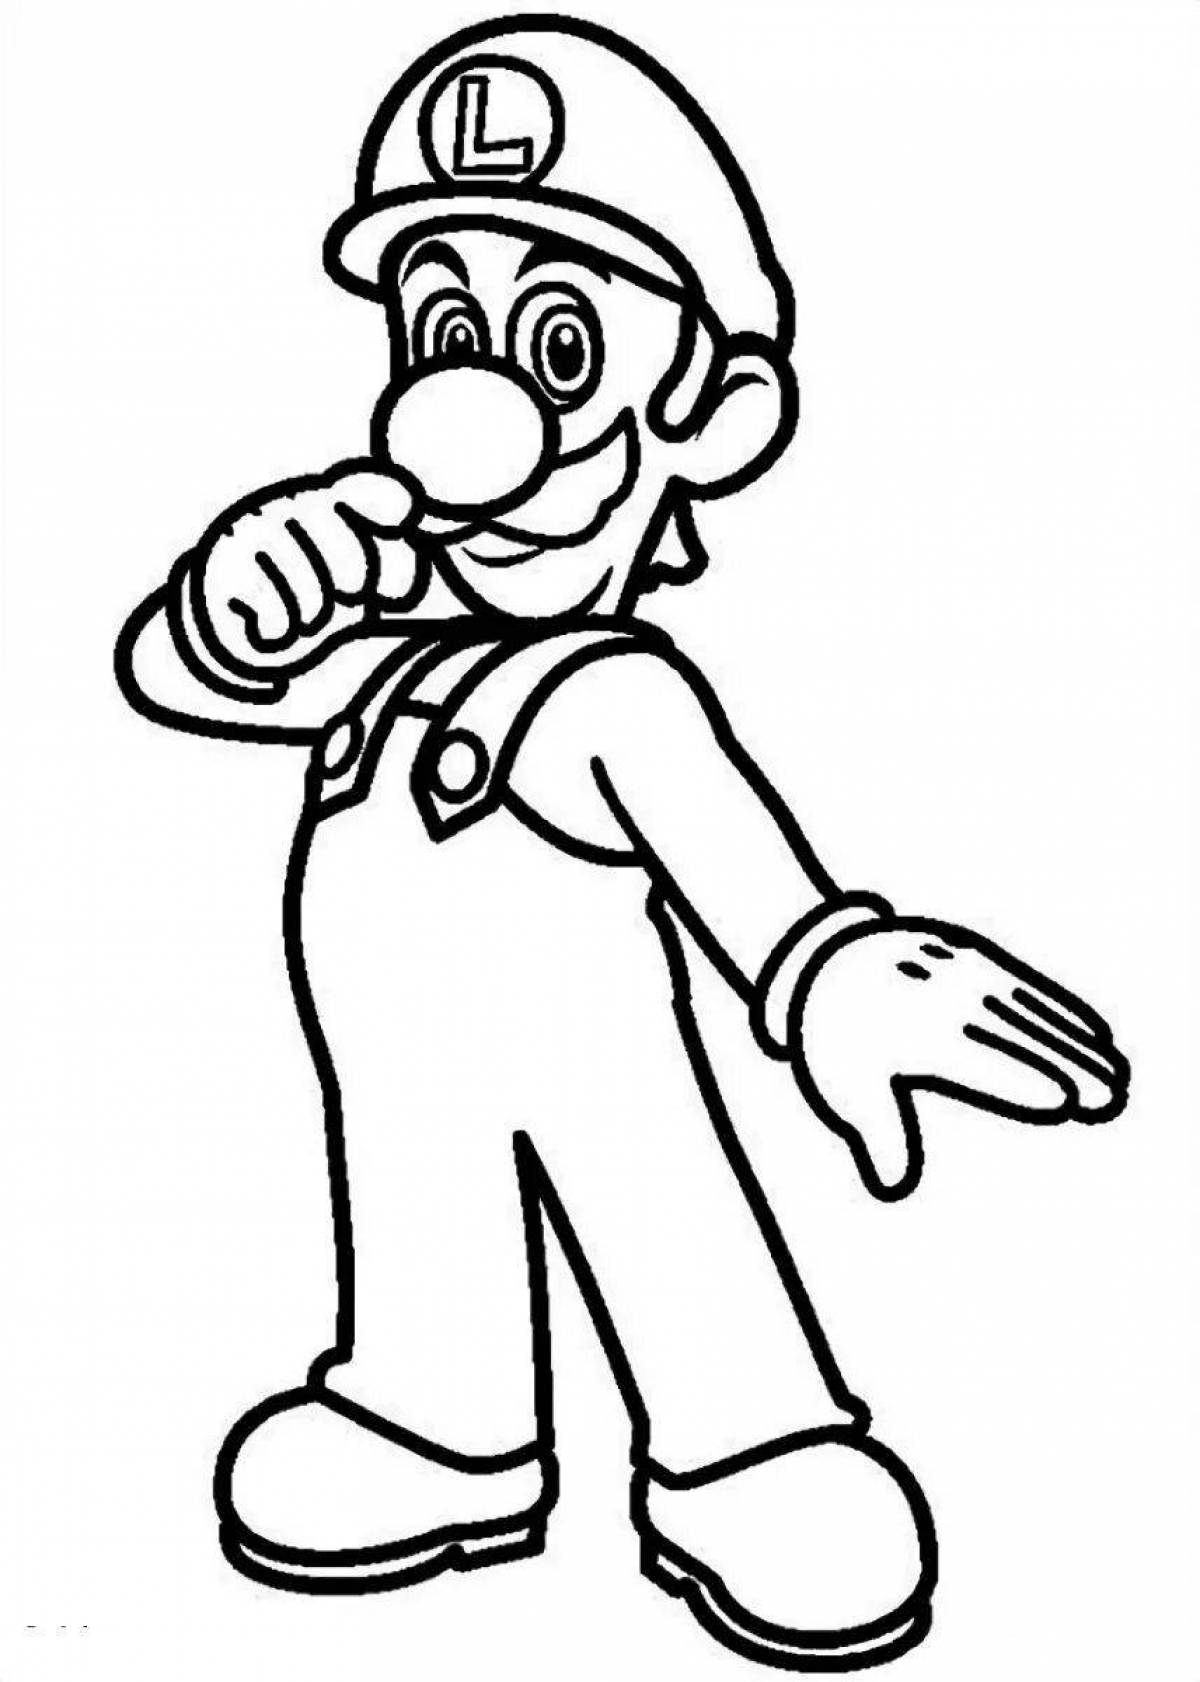 Luigi's creative coloring